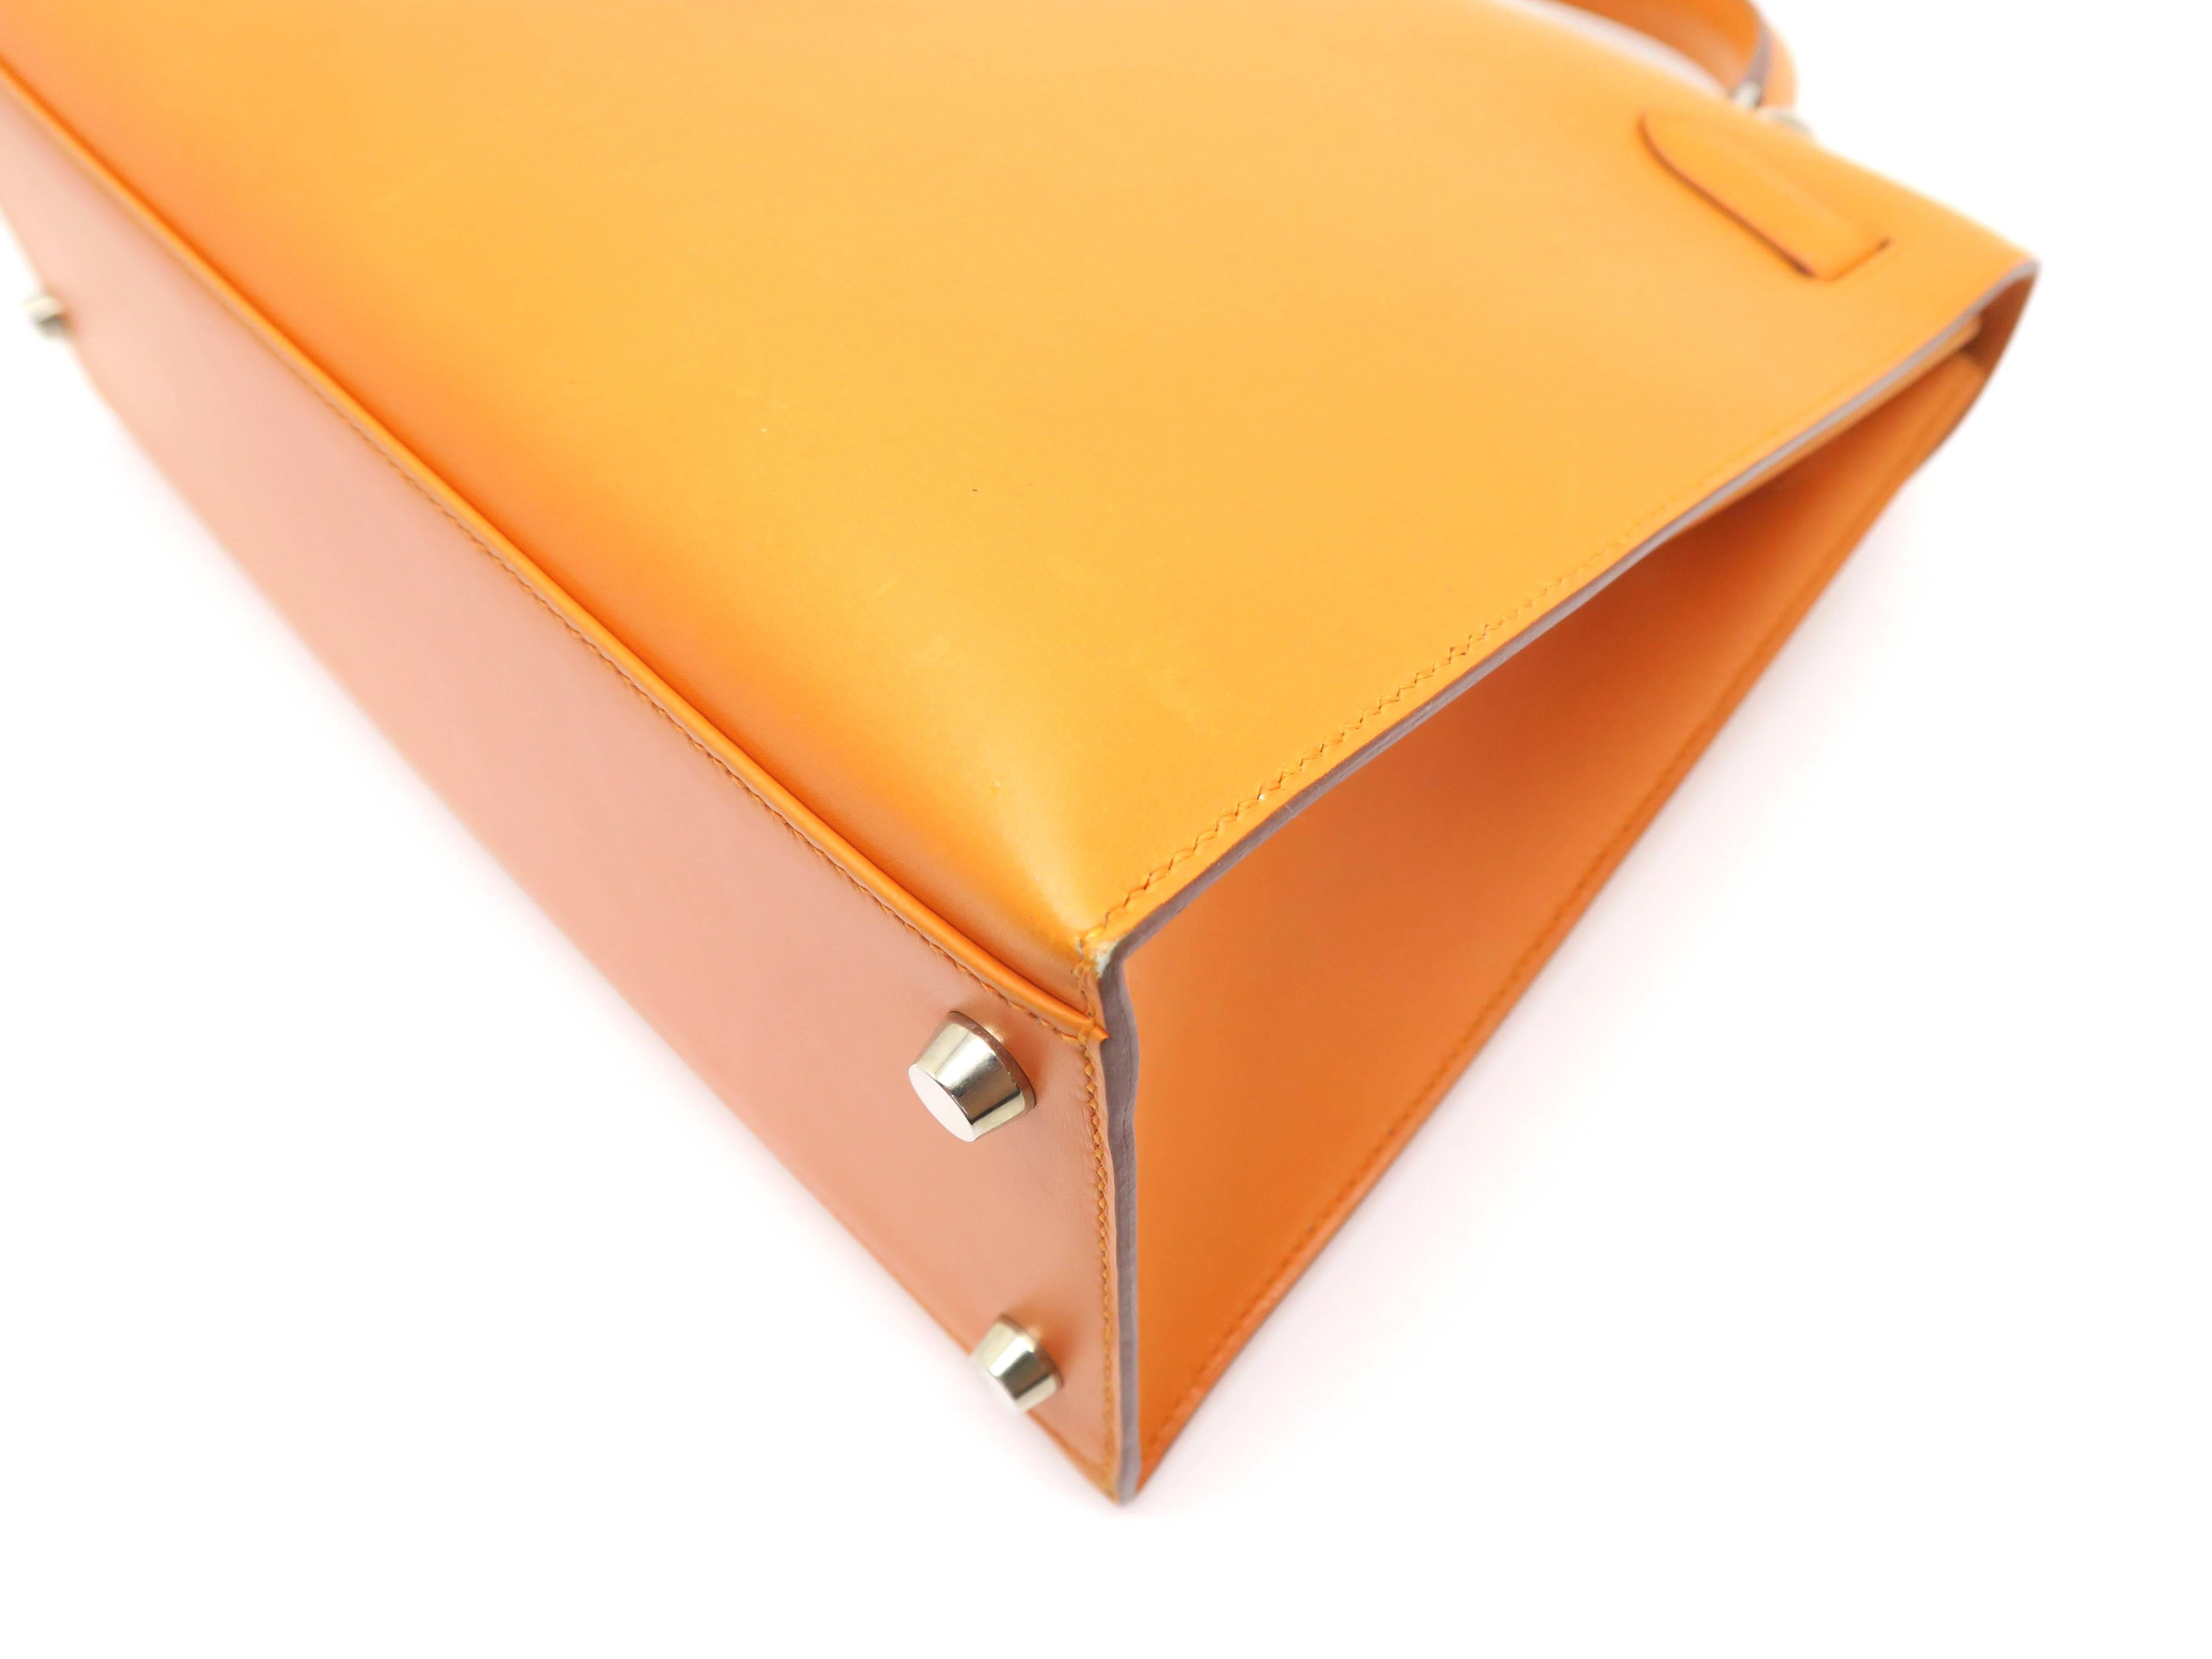 purse that comes in an orange box